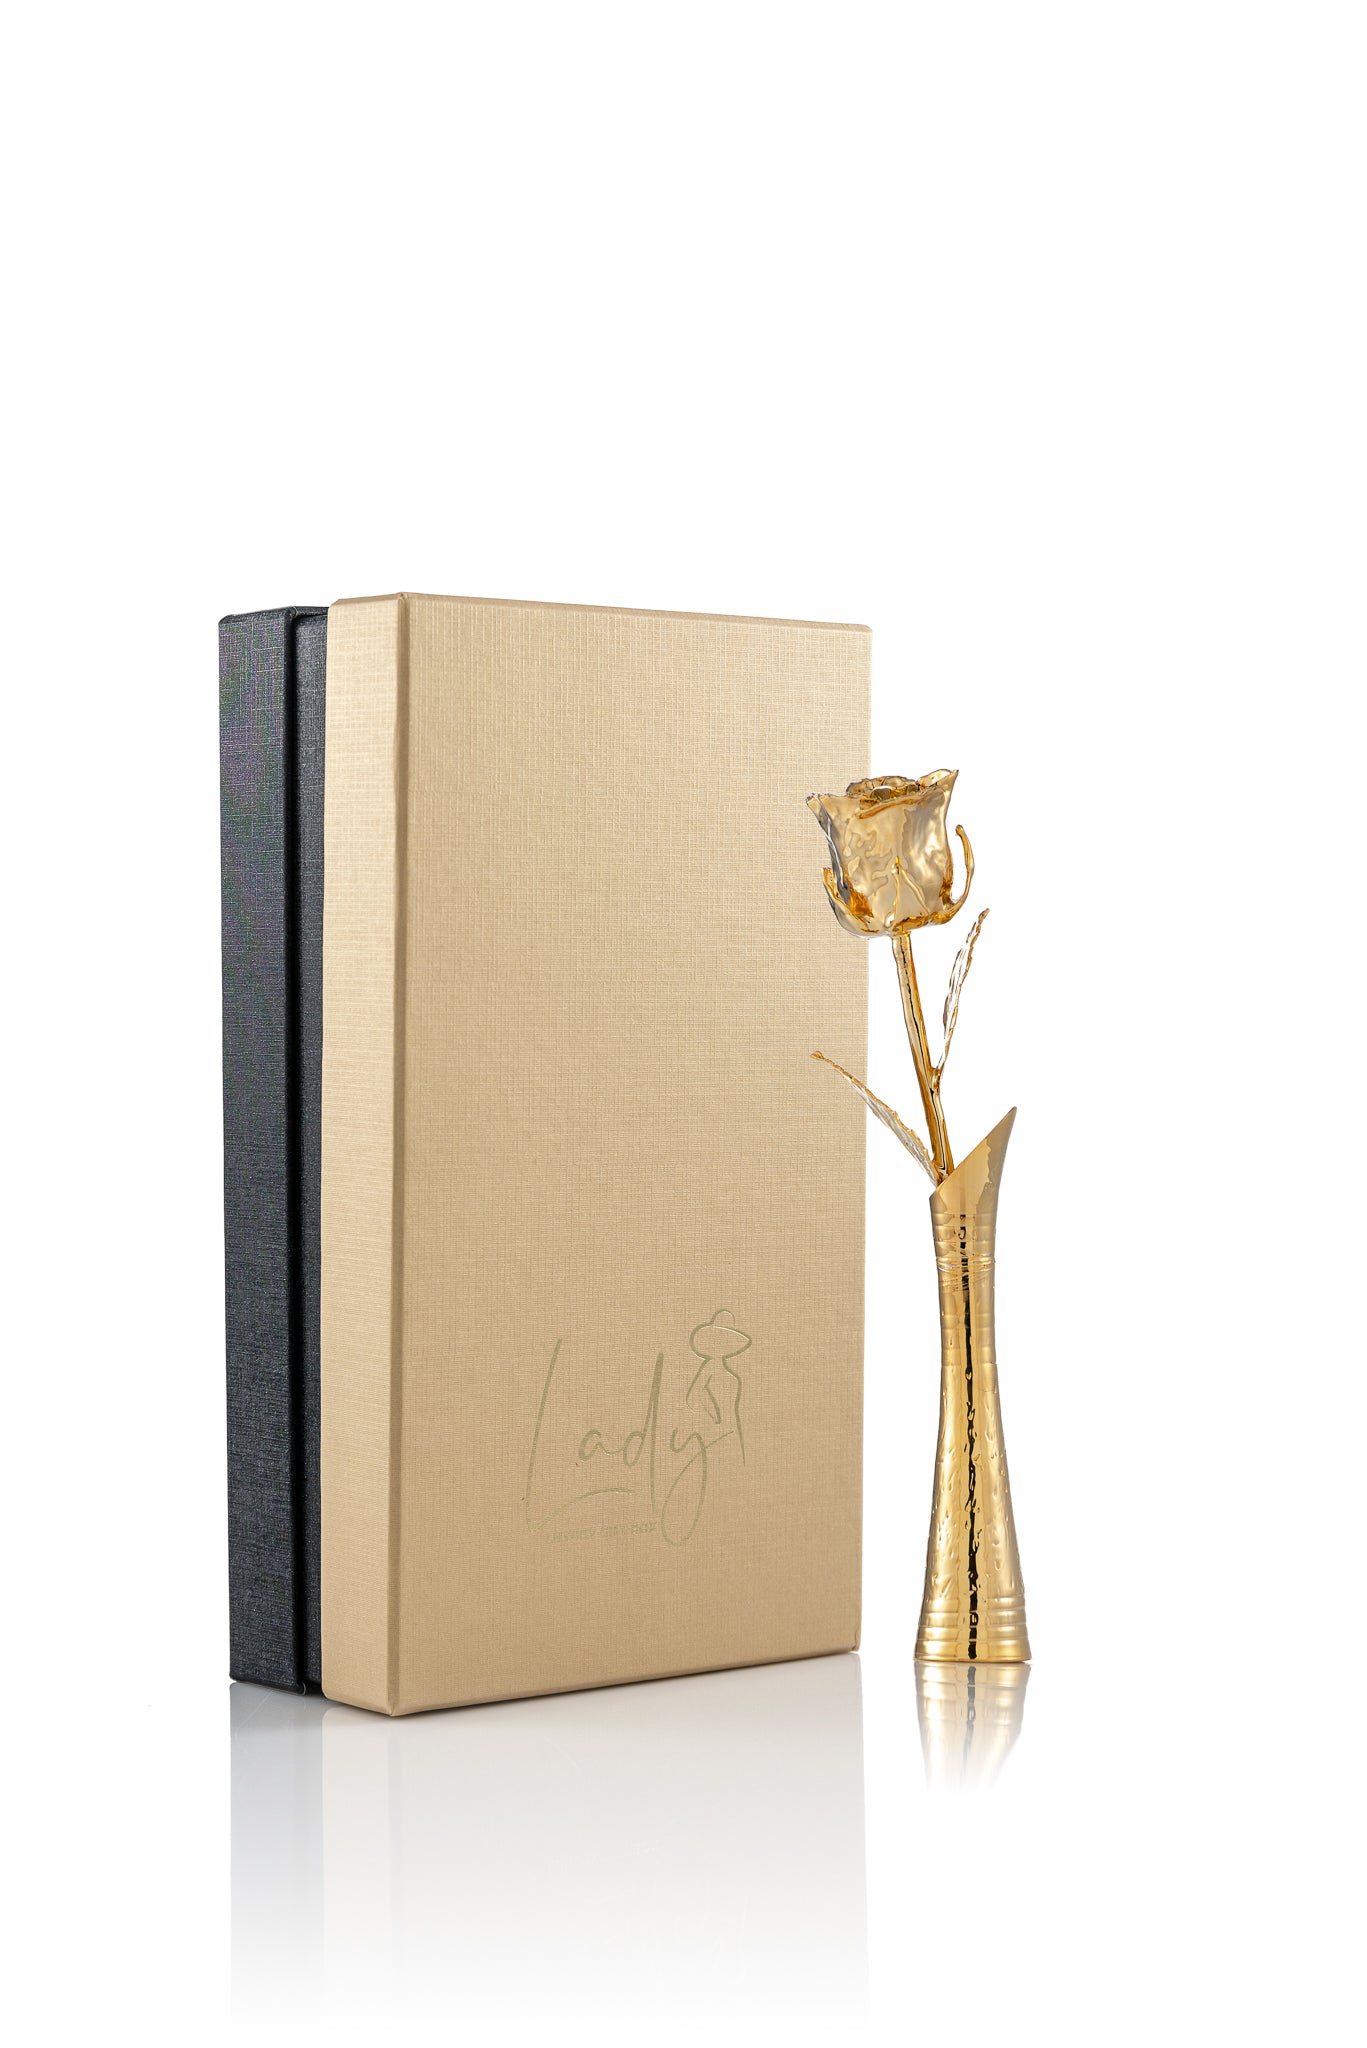 LADY® Gold set Rose with Vase – Elegant, Unique, and Everlasting Gift - 24K gold plated rose